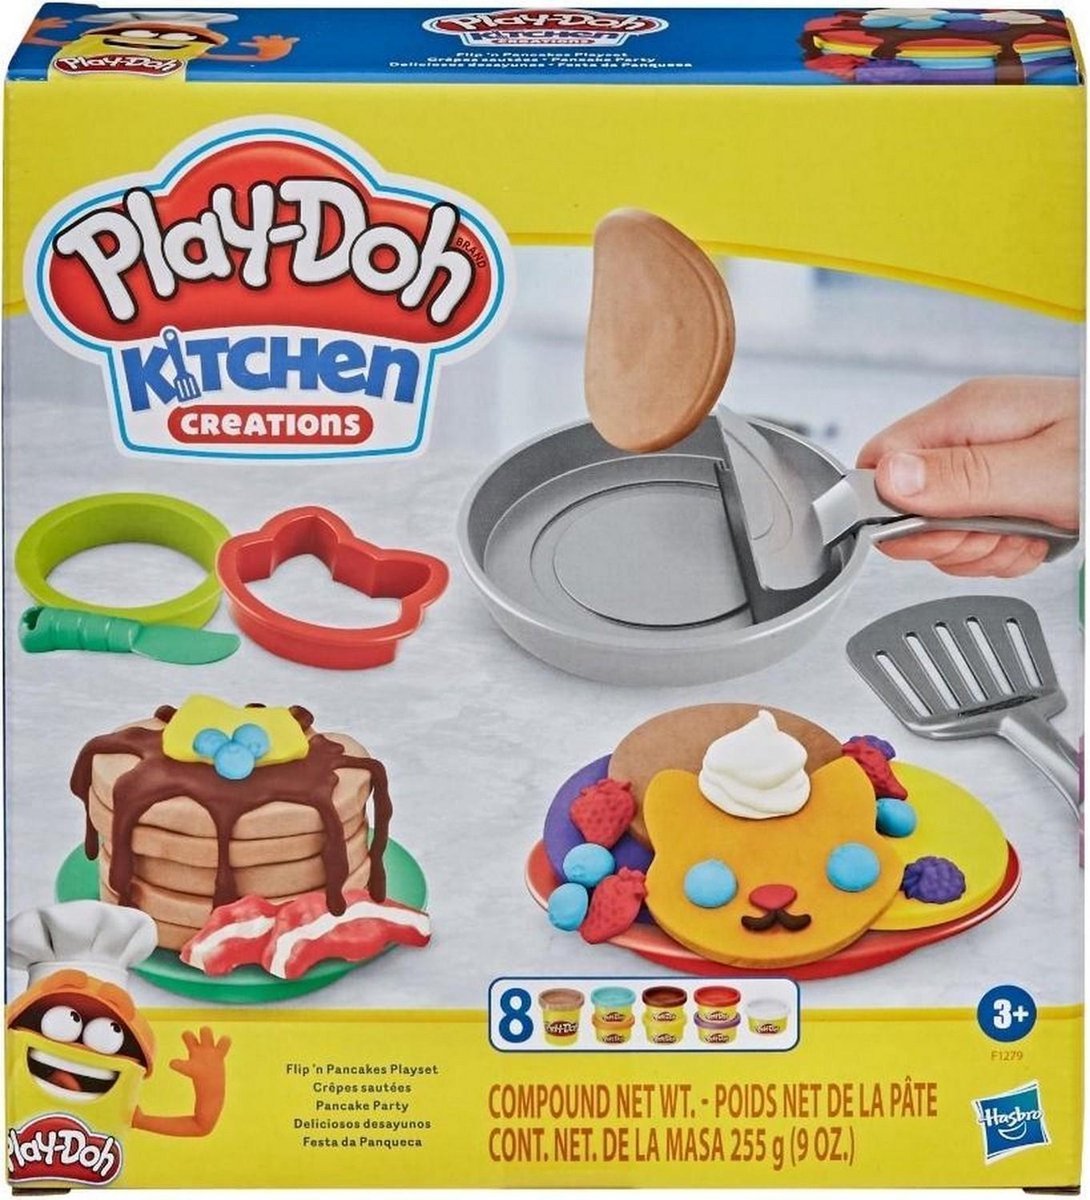 Play-doh Play Doh speelset Kitchen flip in the pan junior 23 delig